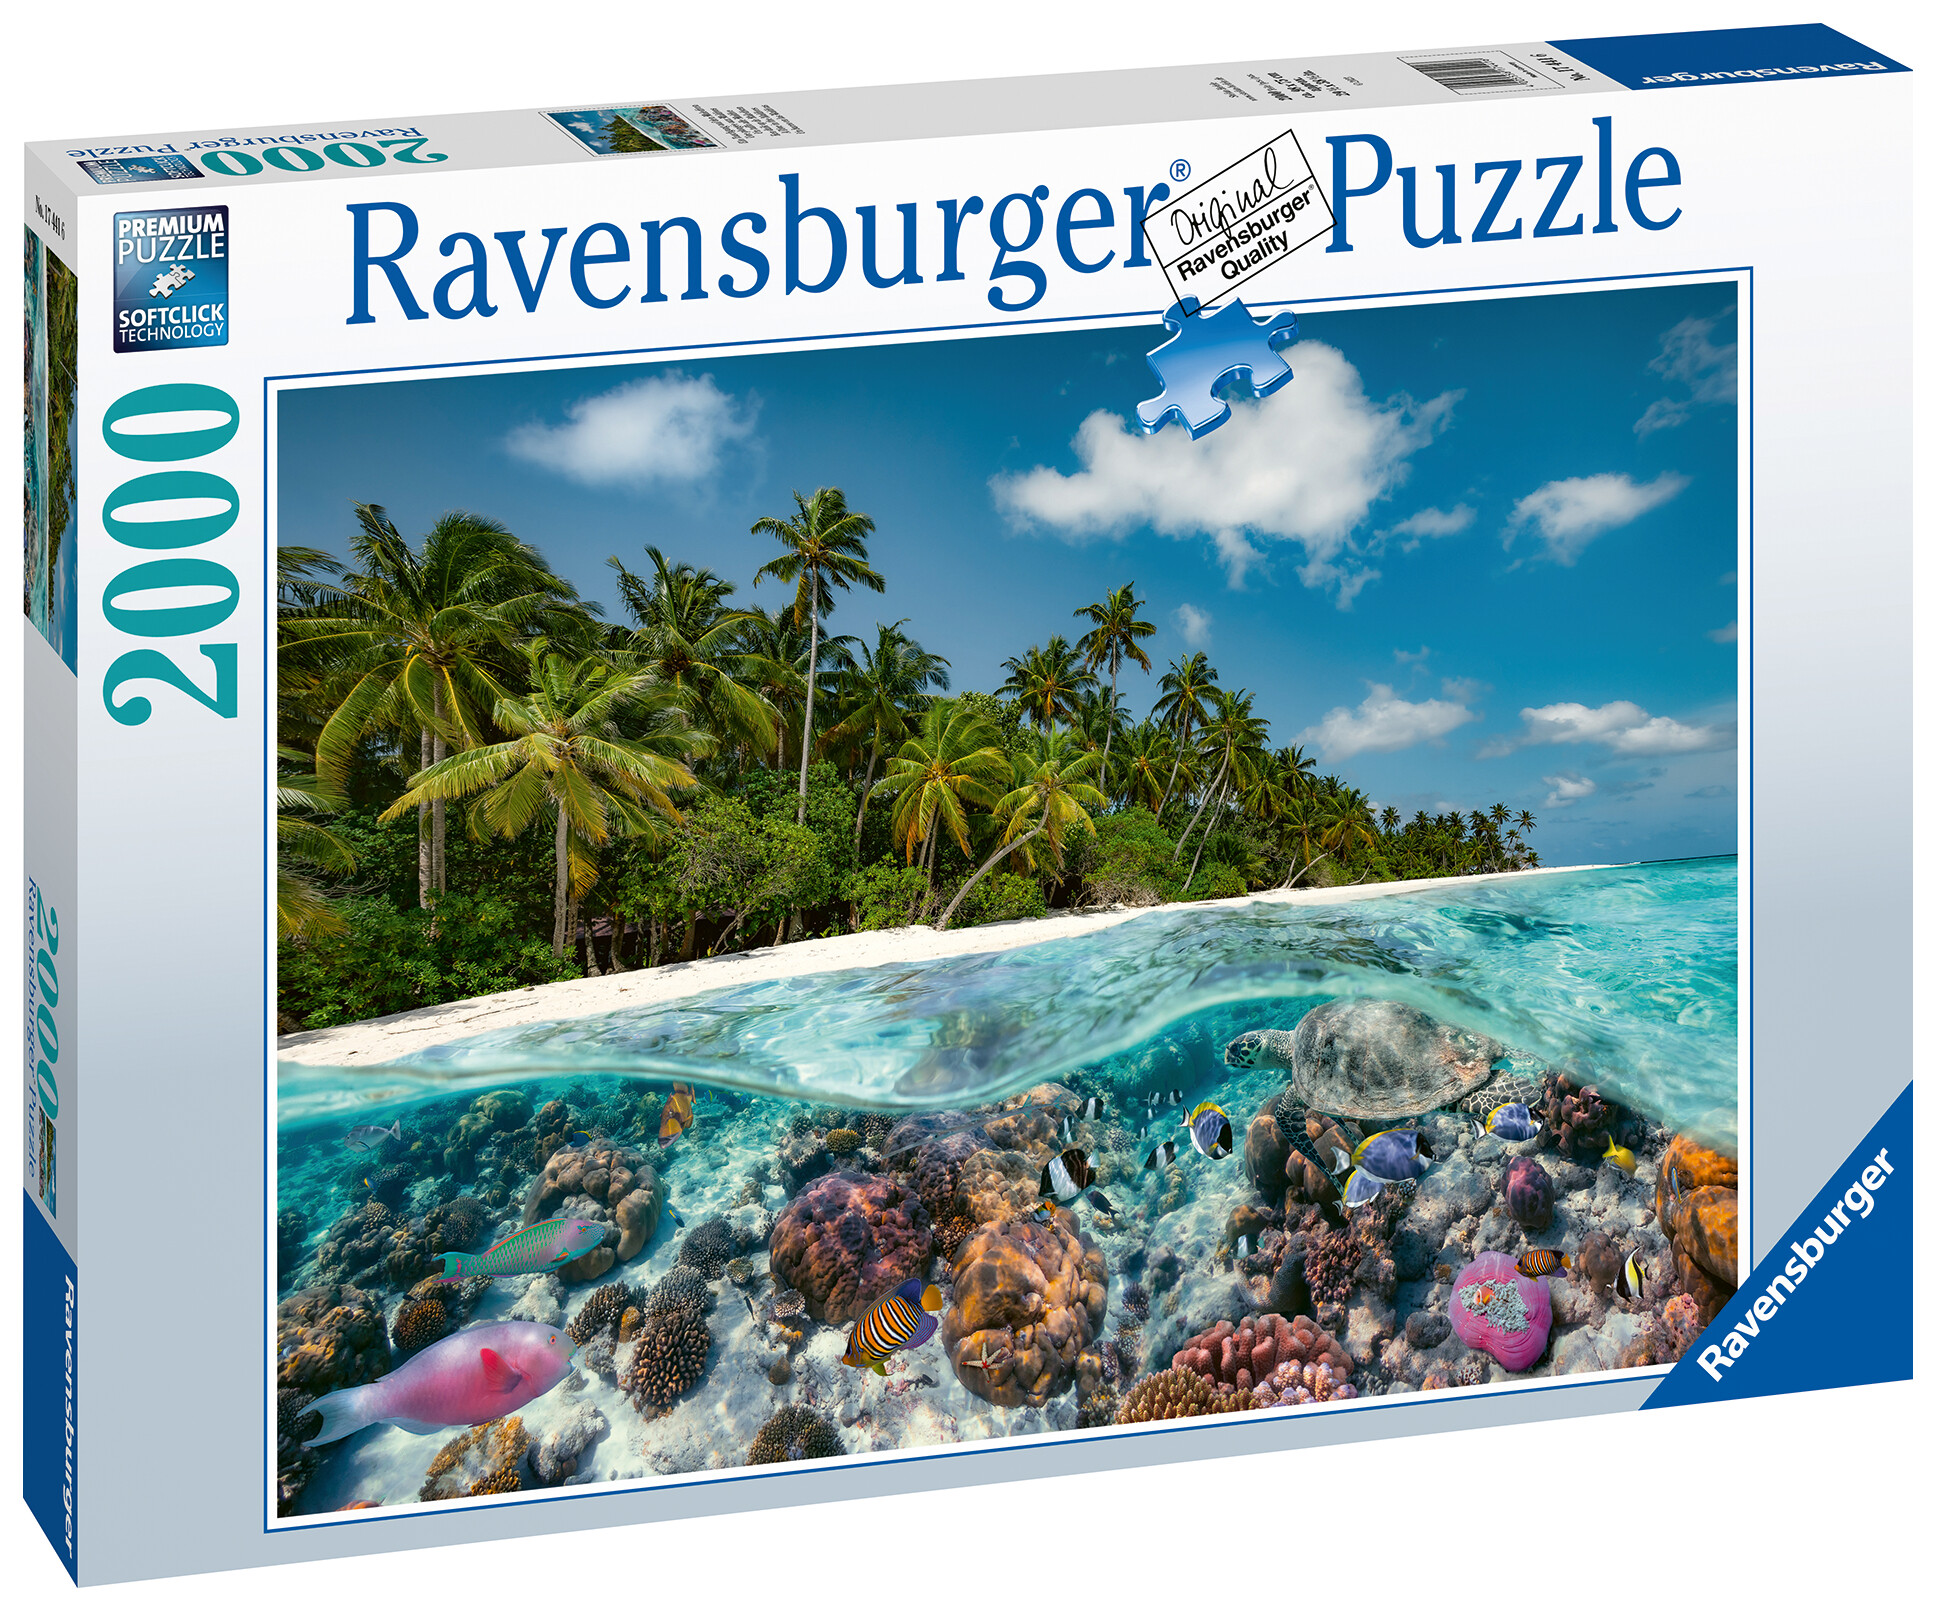 Ravensburger - puzzle un tuffo alle maldive, 2000 pezzi, puzzle adulti - RAVENSBURGER